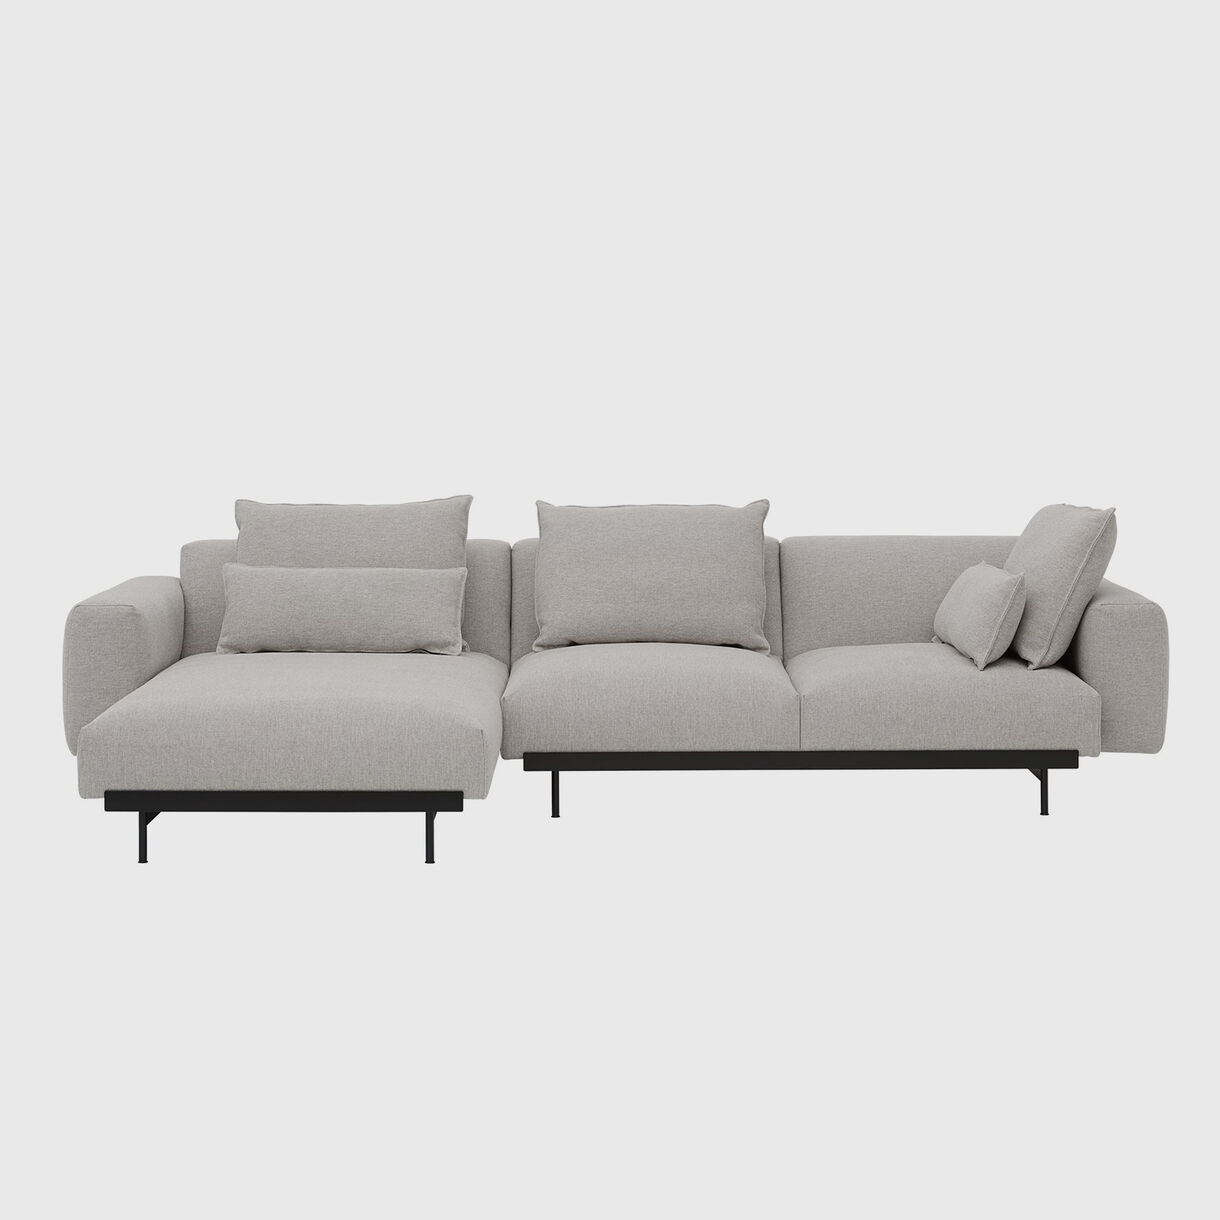 In Situ 3 Seater Sofa, 3-Seater Configuration 7, Clay 12